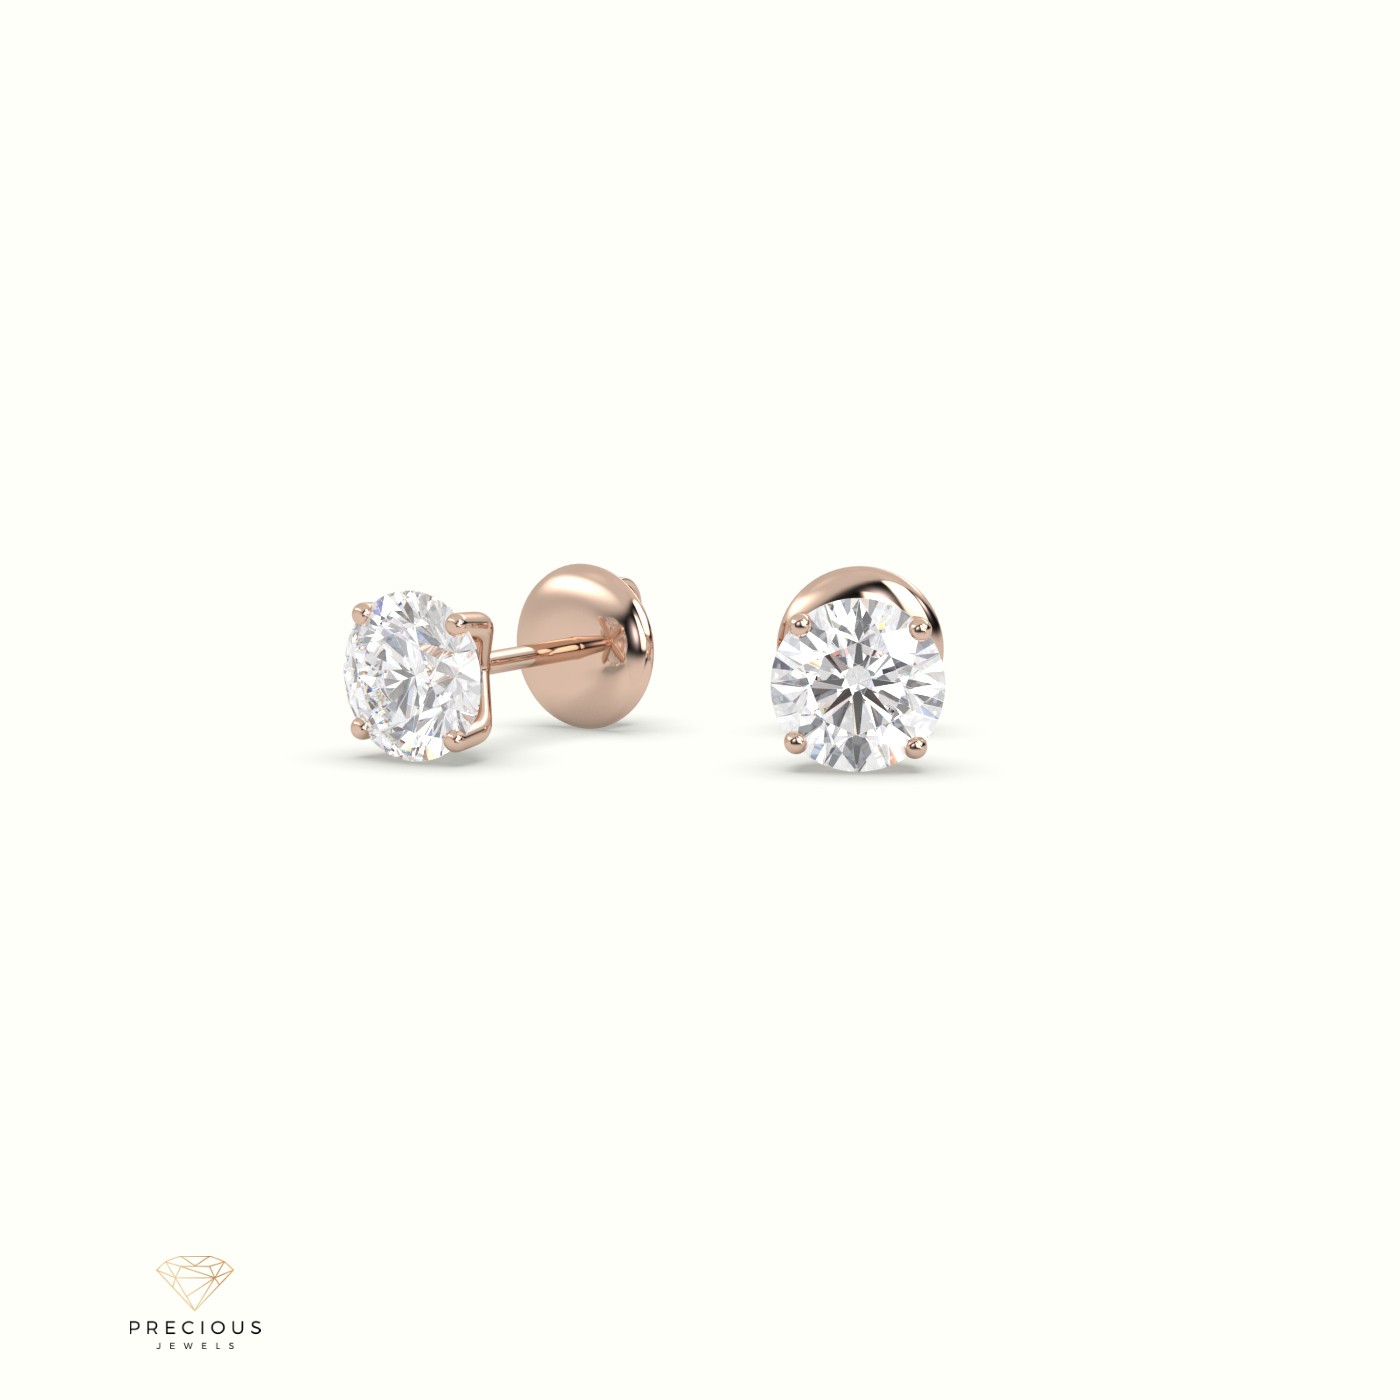 18k rose gold 4 prongs round diamond studs earrings - free setting